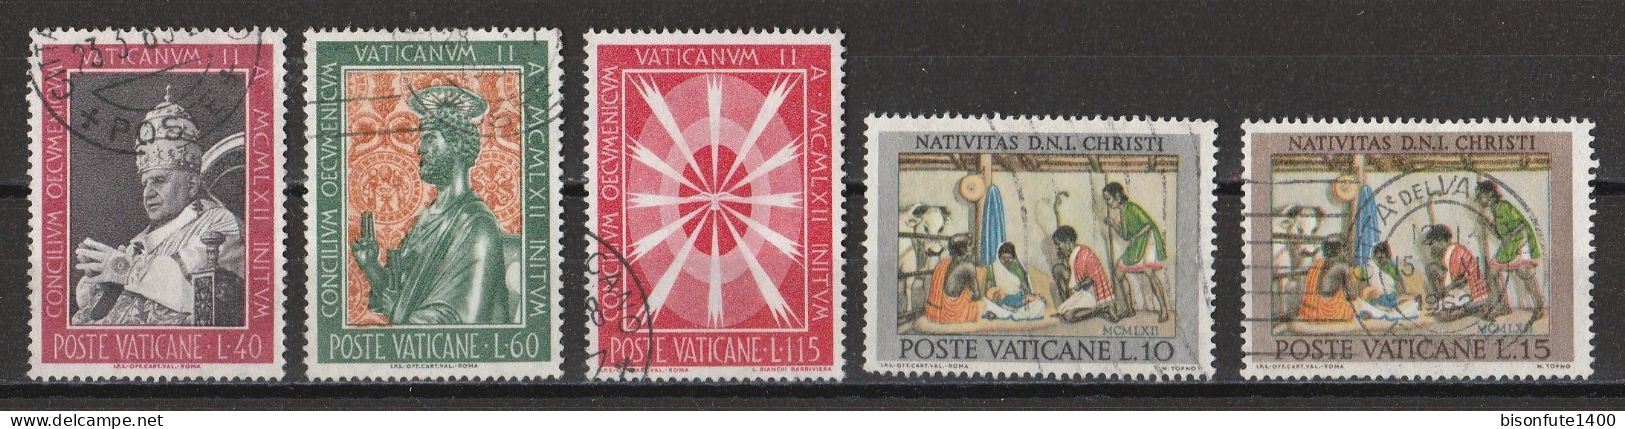 Vatican 1962 : Timbres Yvert & Tellier N° 357 - 358 - 360 - 364 - 366 - 367 - 368 - 369 - 370 - 371 Et 372 Oblitérés. - Usados